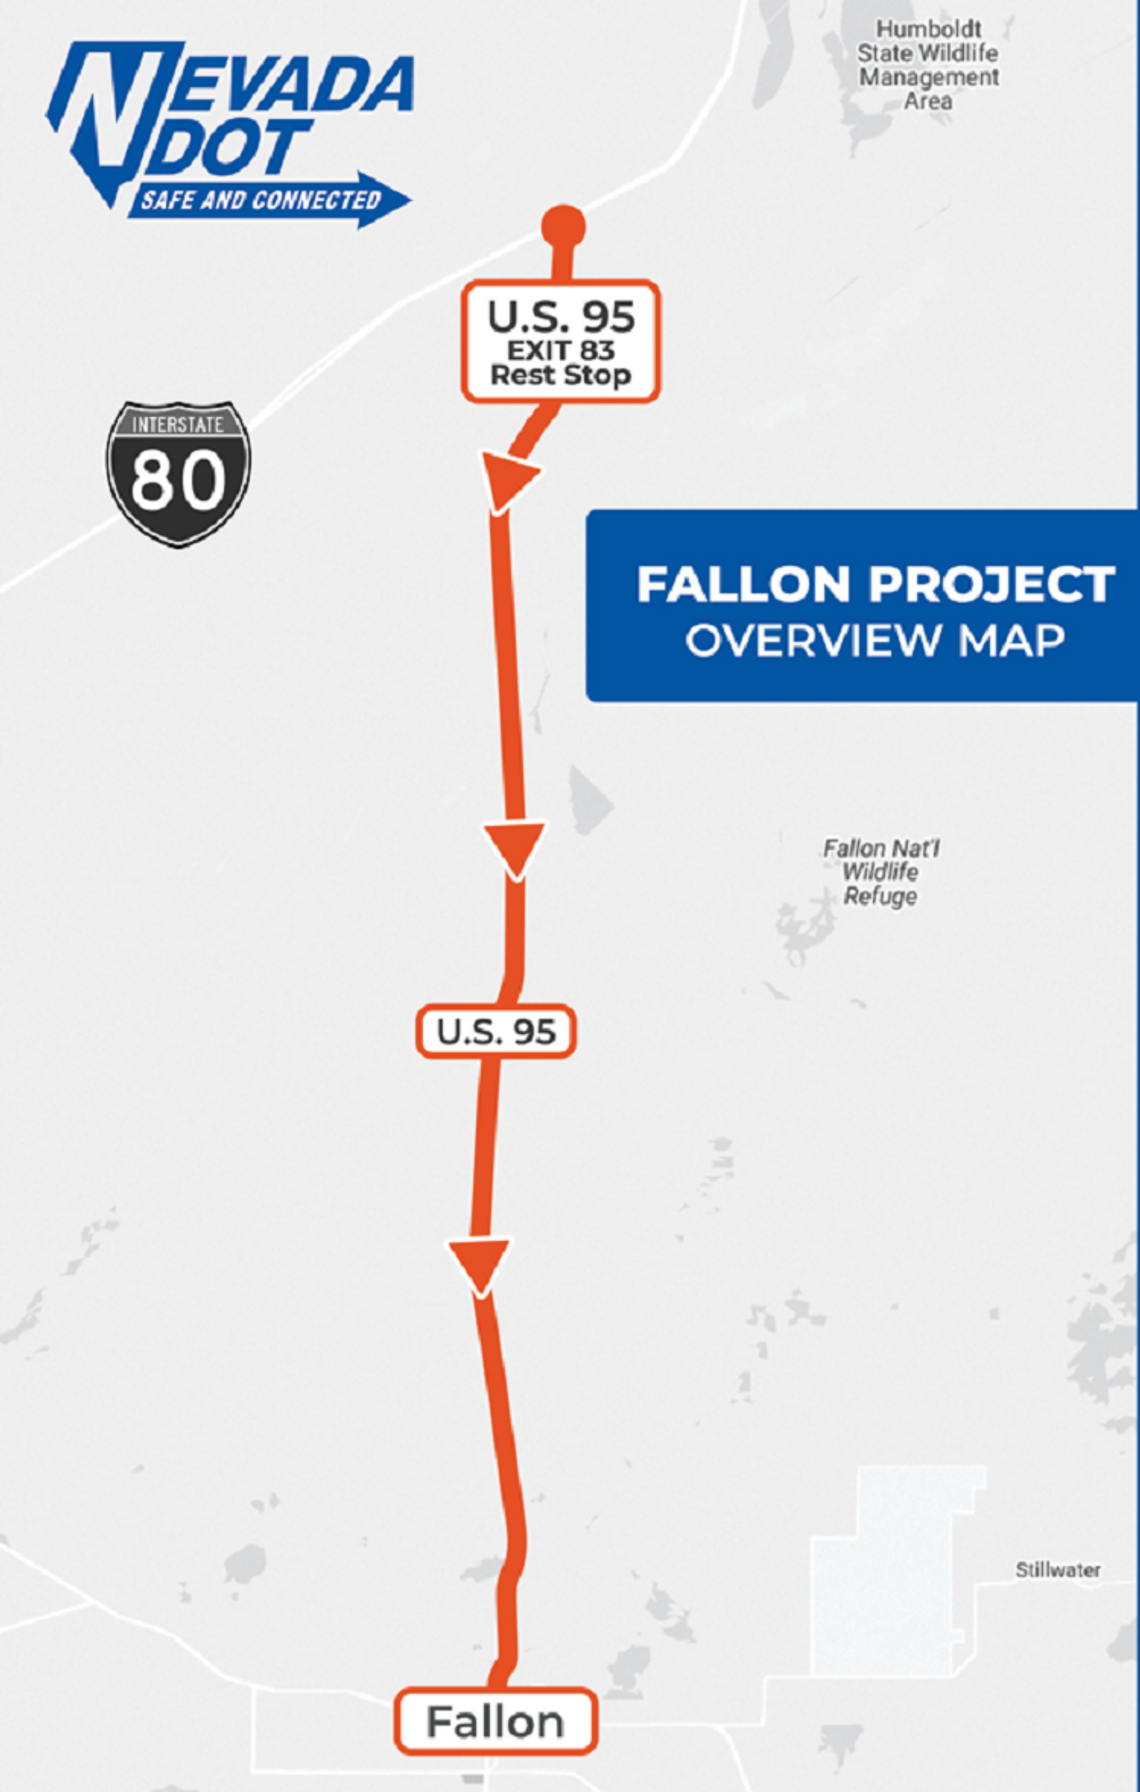 Lane Reductions Begin As NDOT Resurfaces U.S. 95 North of Fallon